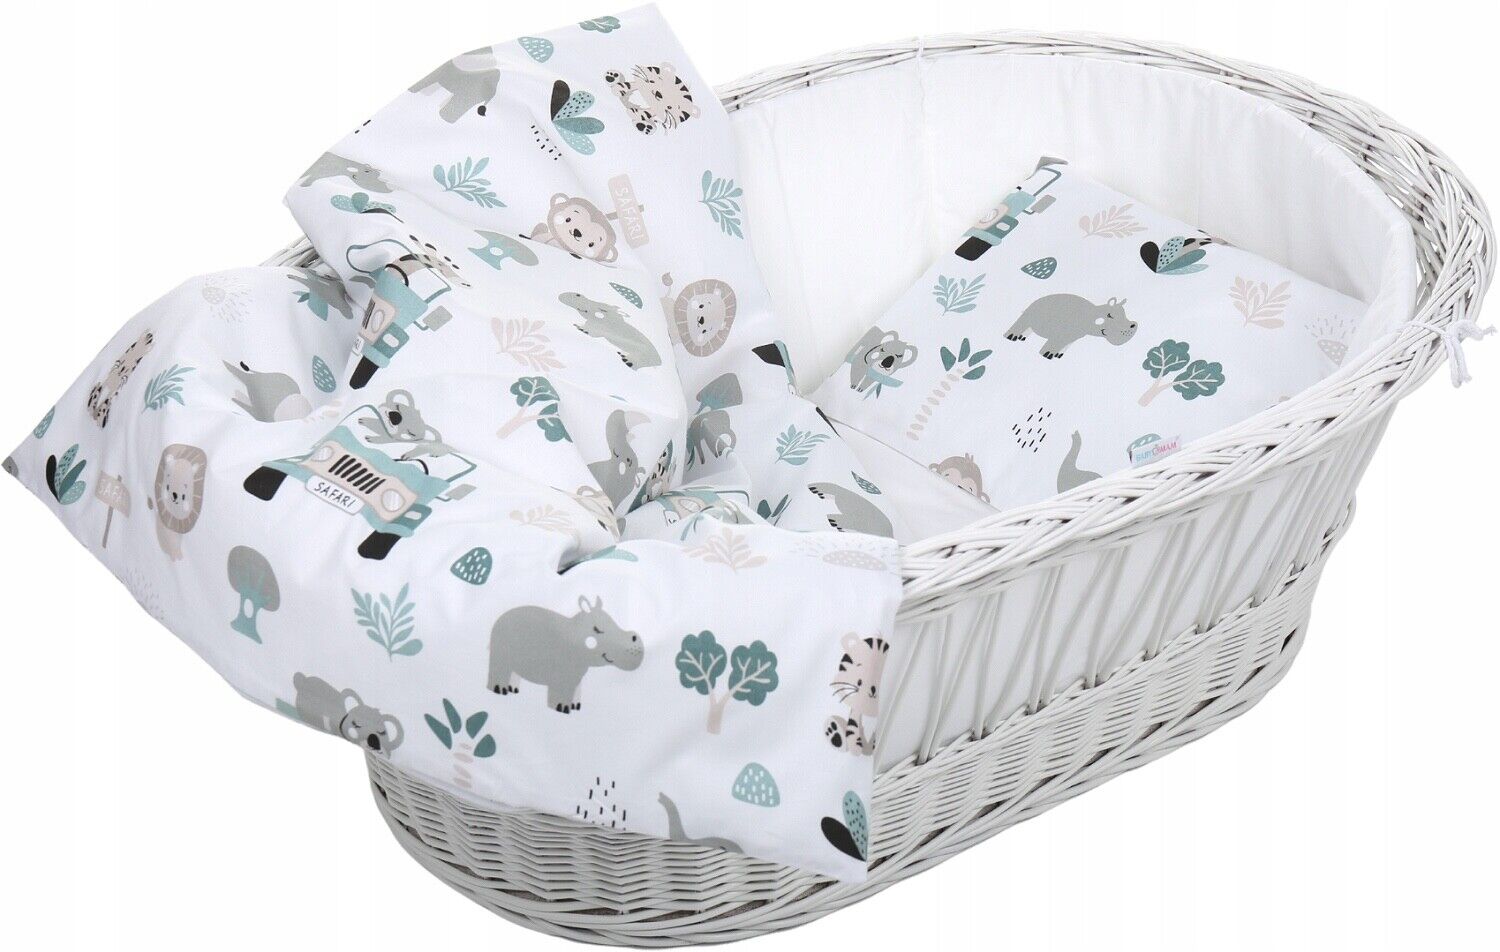 Baby bedding set 6pc 70x80 fit crib bumper pillow duvet sheet On Safari